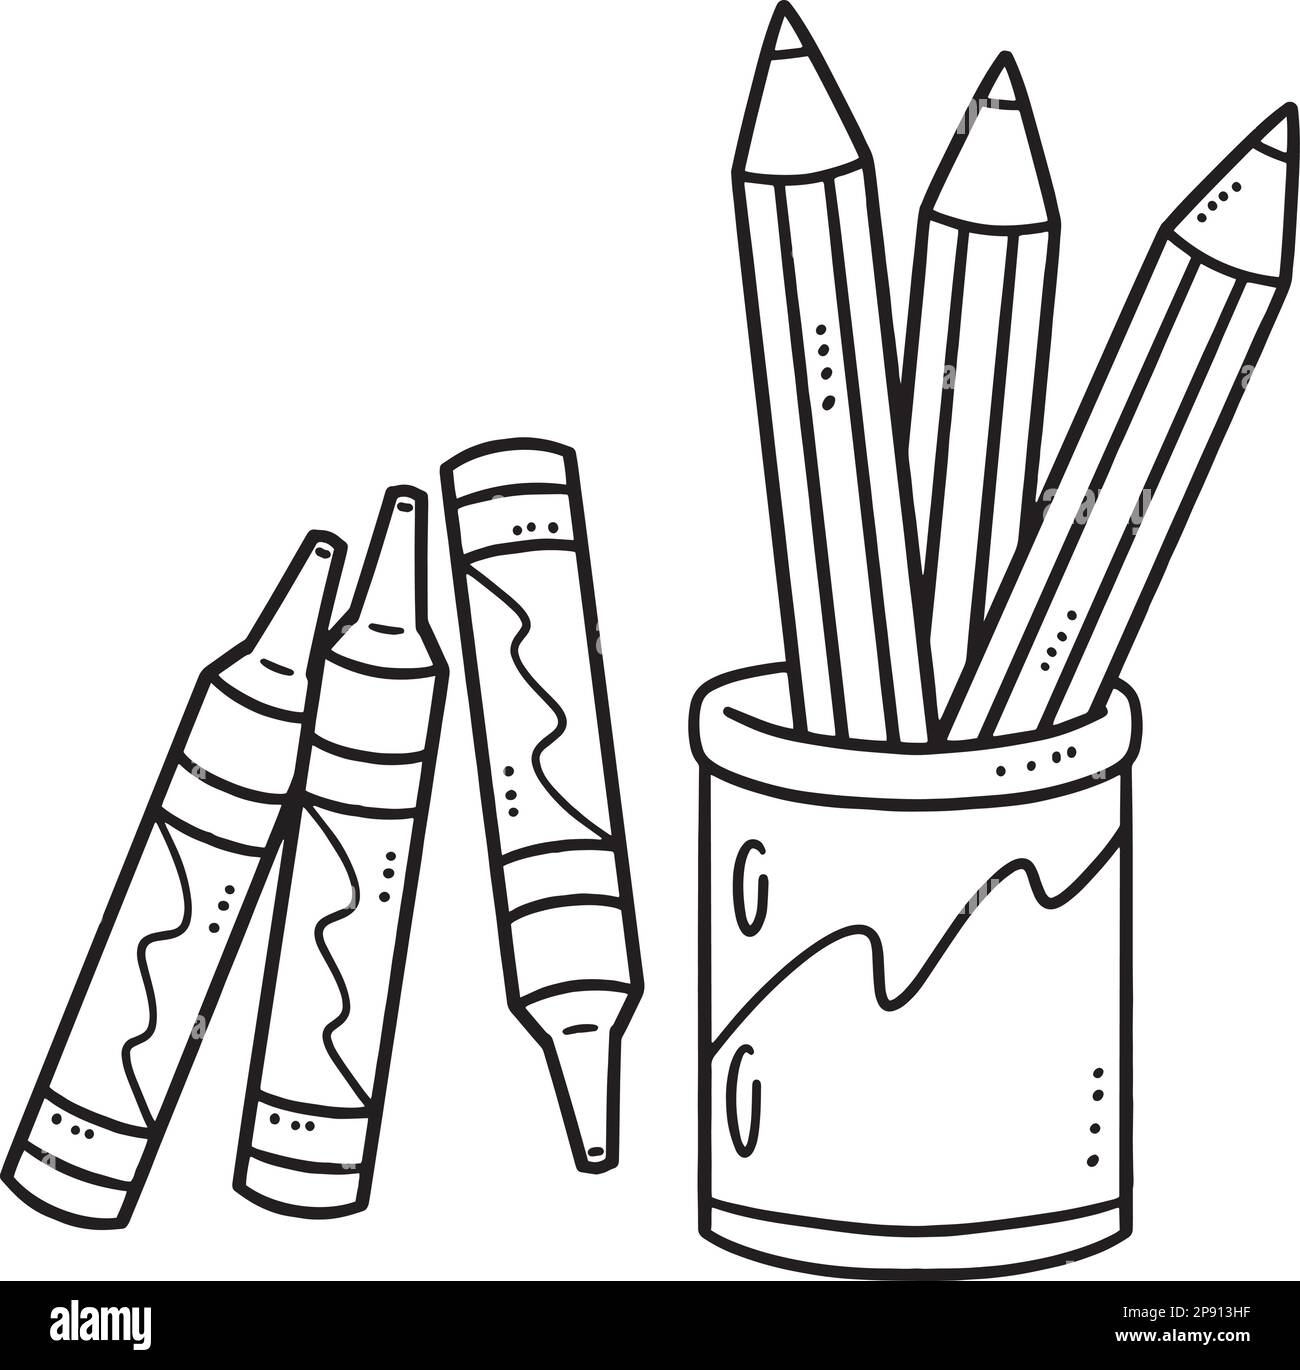 Risultati immagini per black marker drawings easy  Easy pen drawing,  Pencil drawings easy, Pen drawing